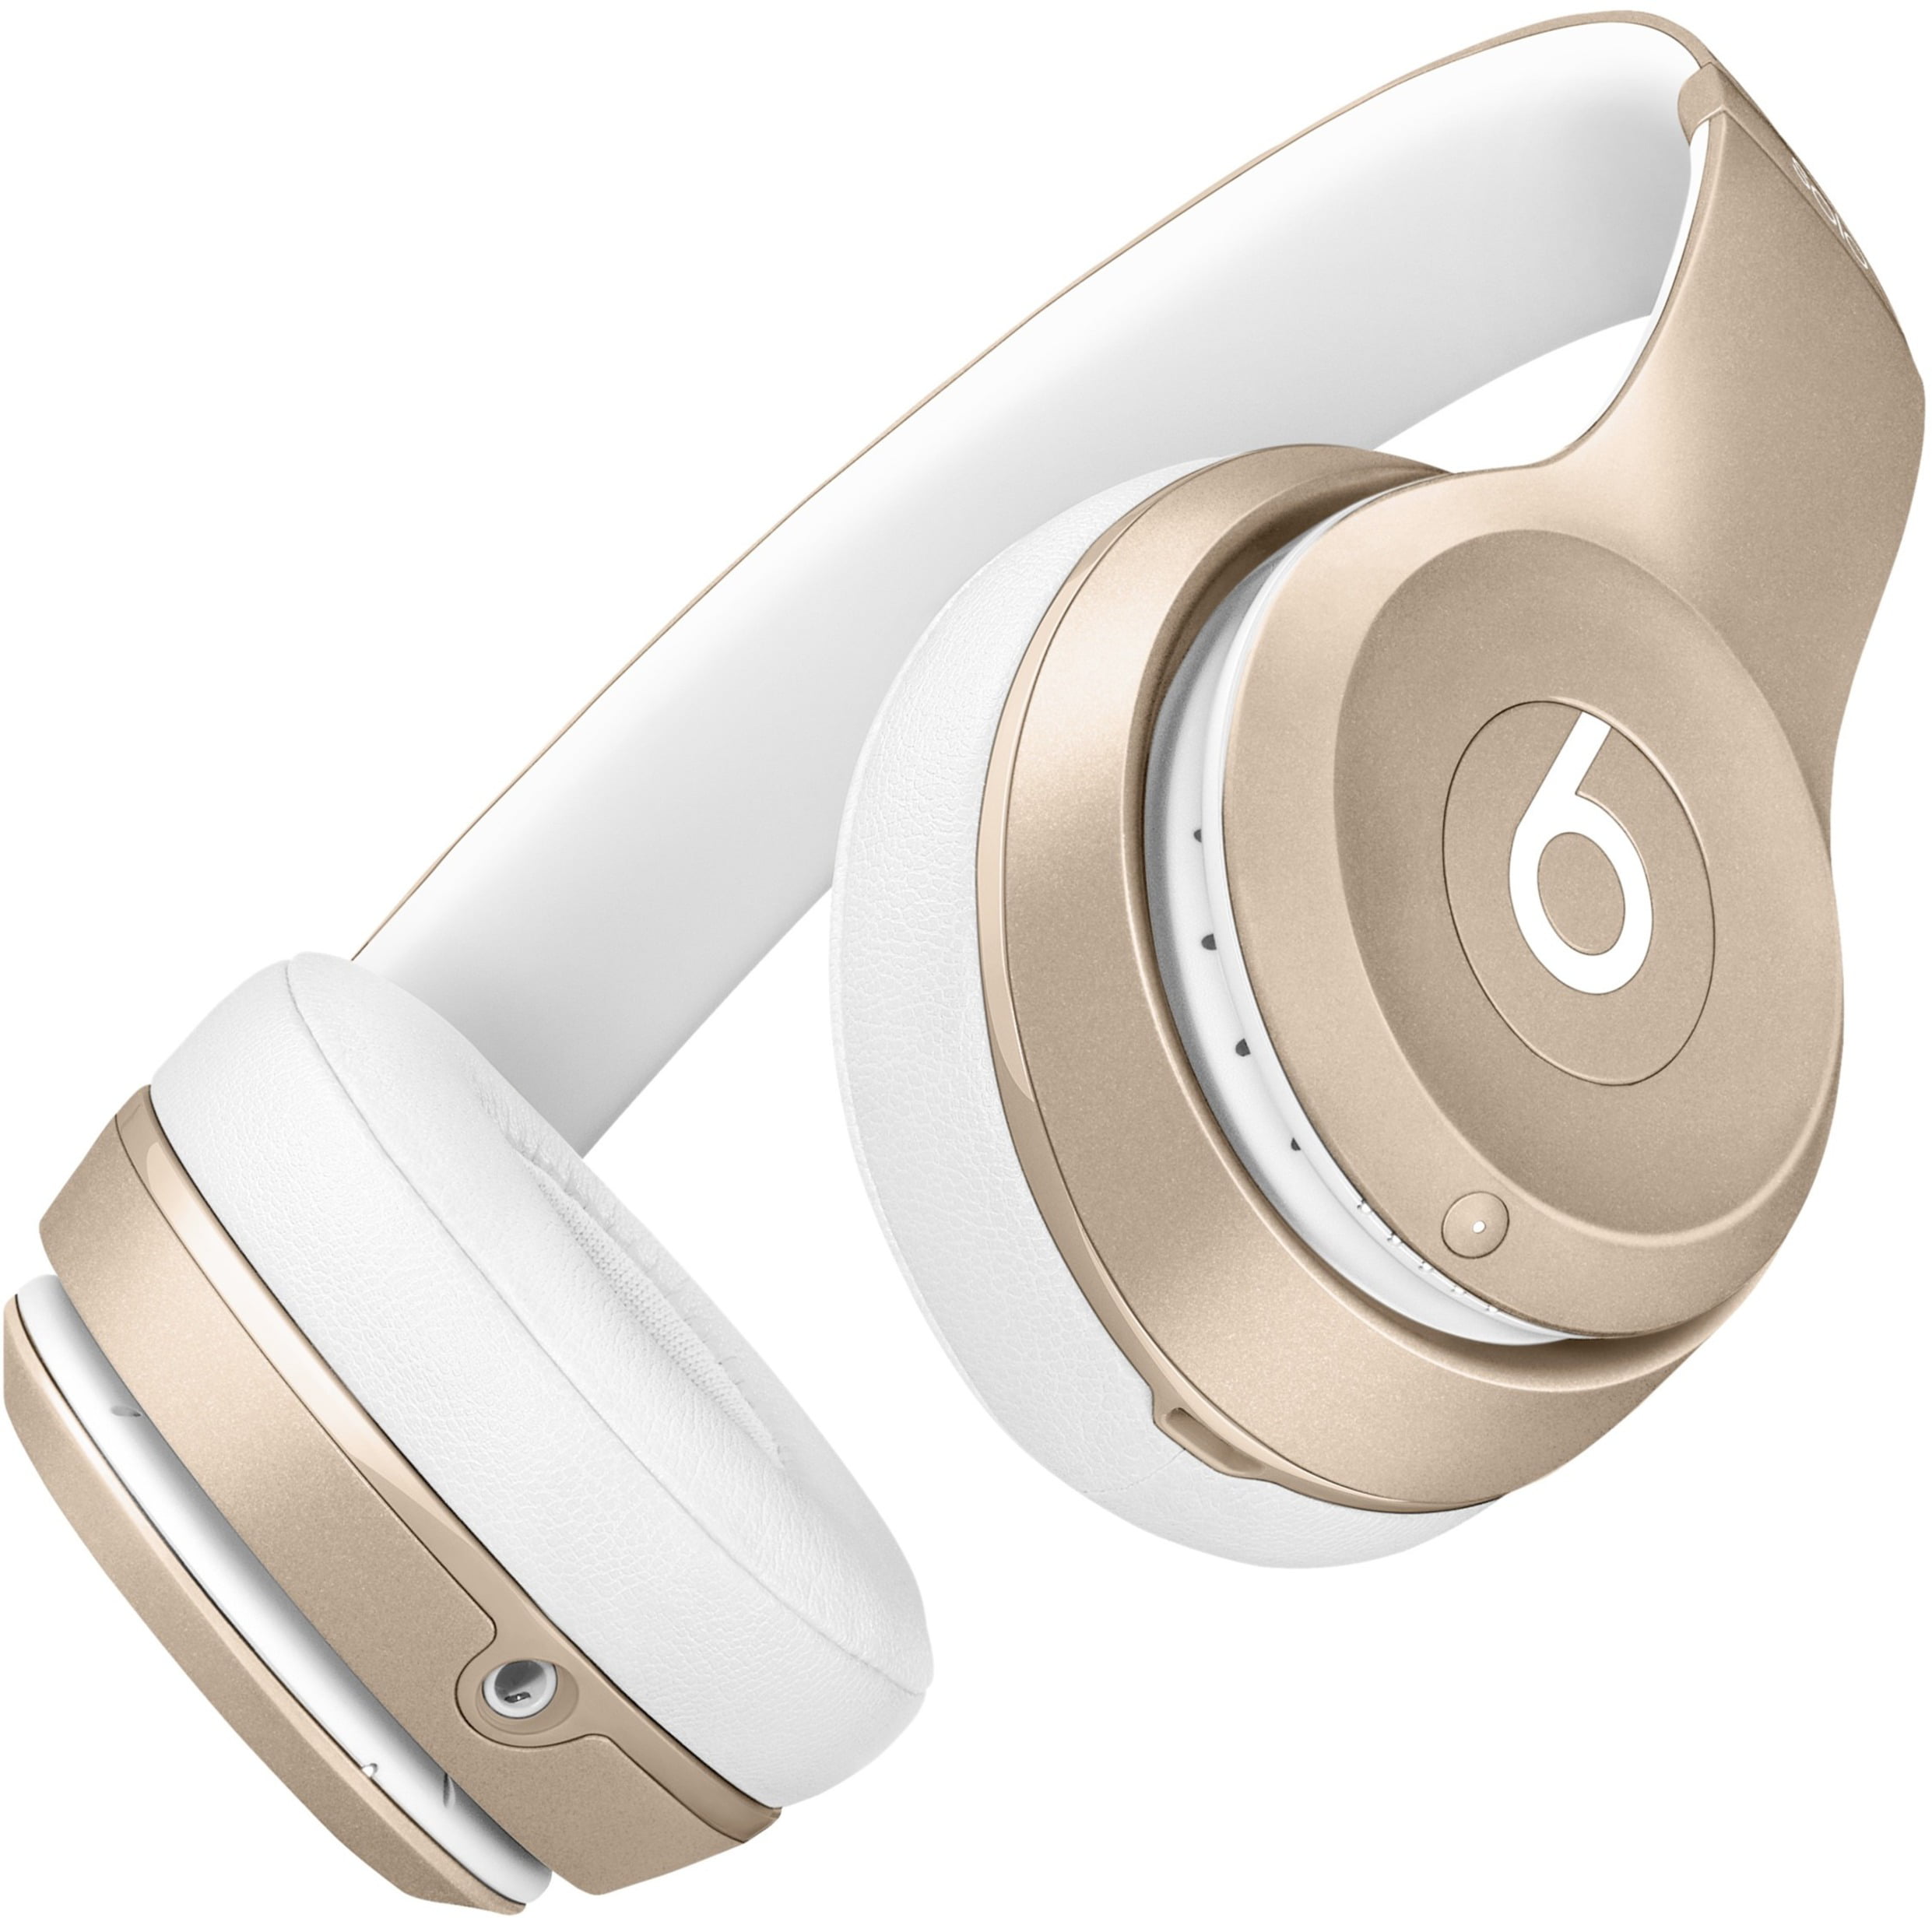 Beats by Dr. Dre Solo2 Wireless On-Ear Headphones, Gold 